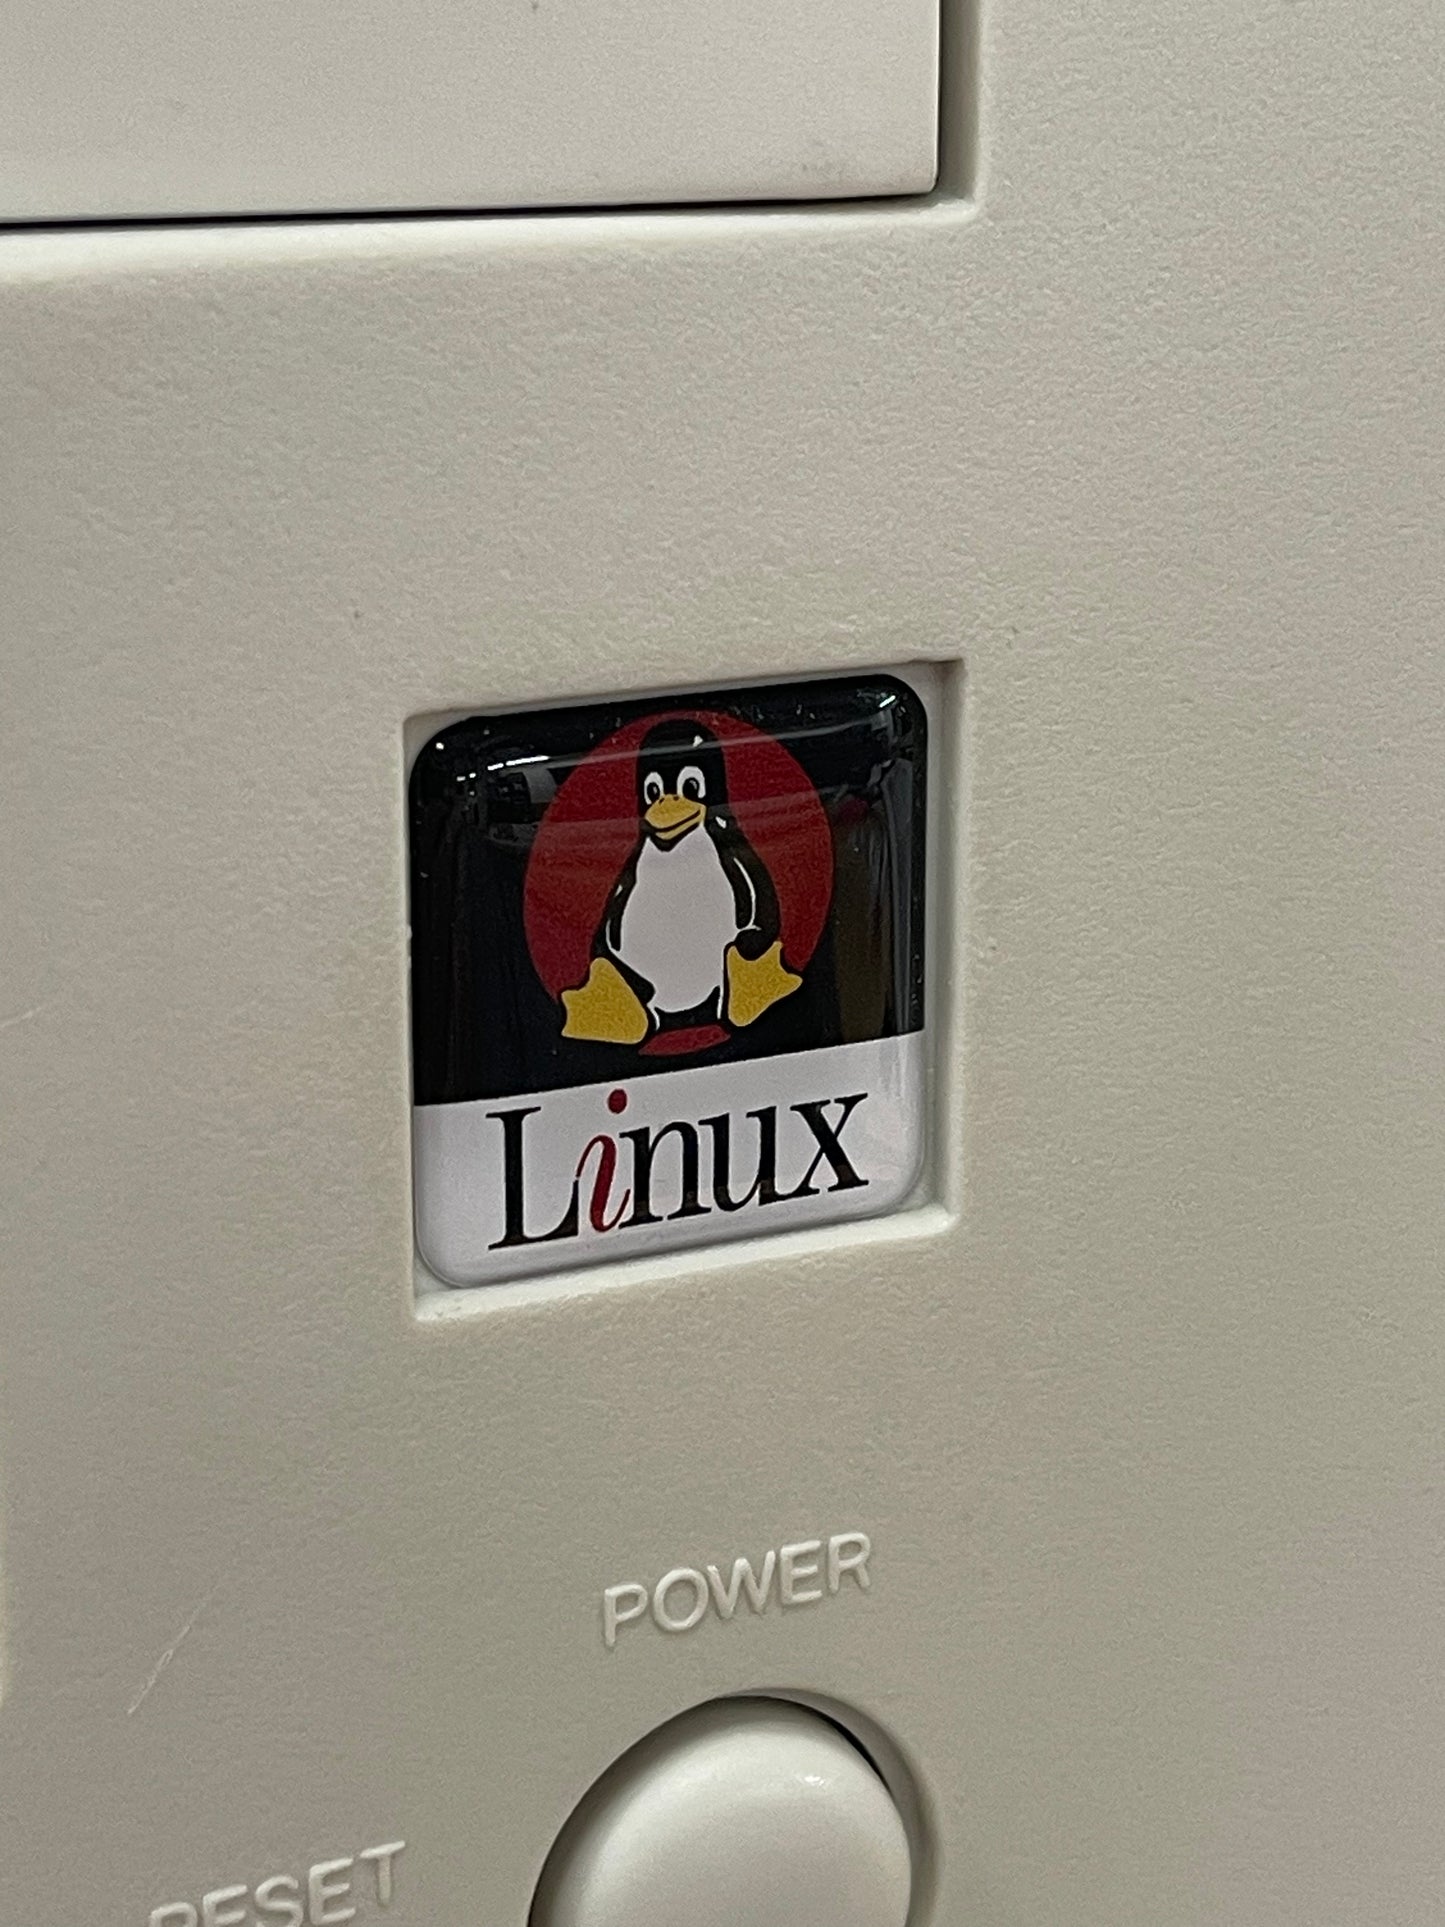 Linux Red Tux Logo Case Badge Sticker - DOMED